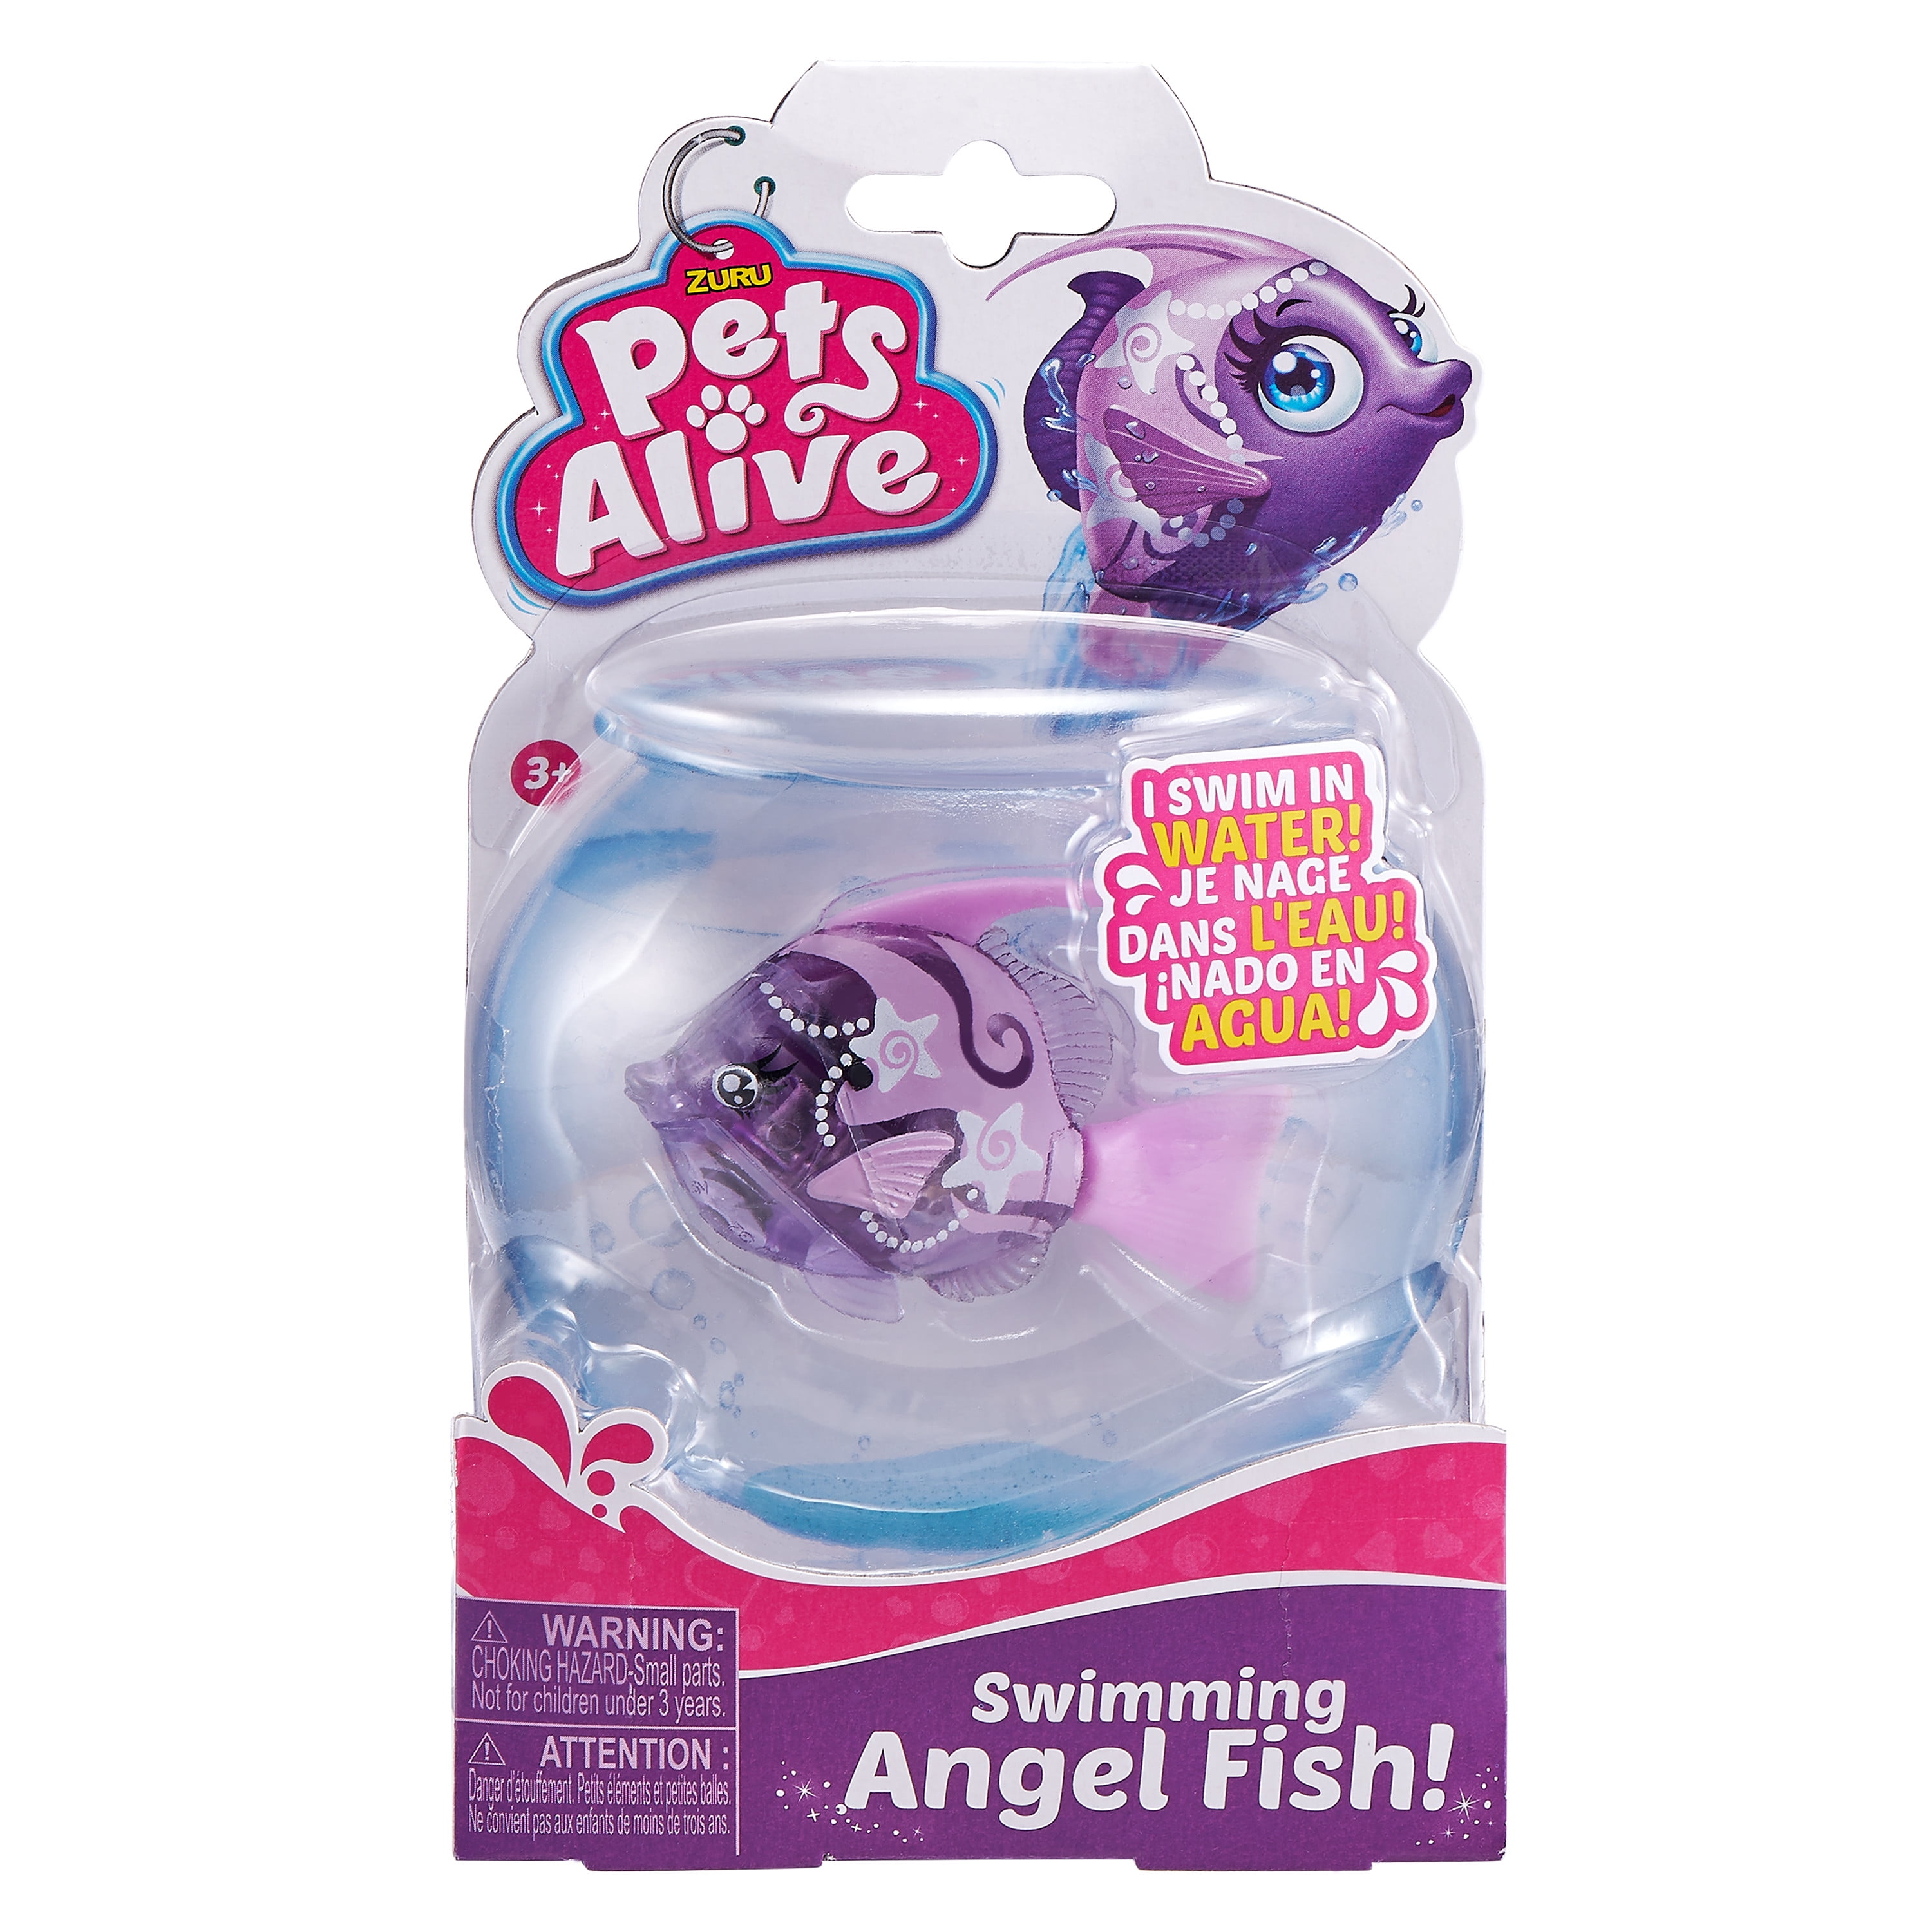 Starbright Robotic Details about   ZURU Pets Alive Swimming Purple Angel Fish 